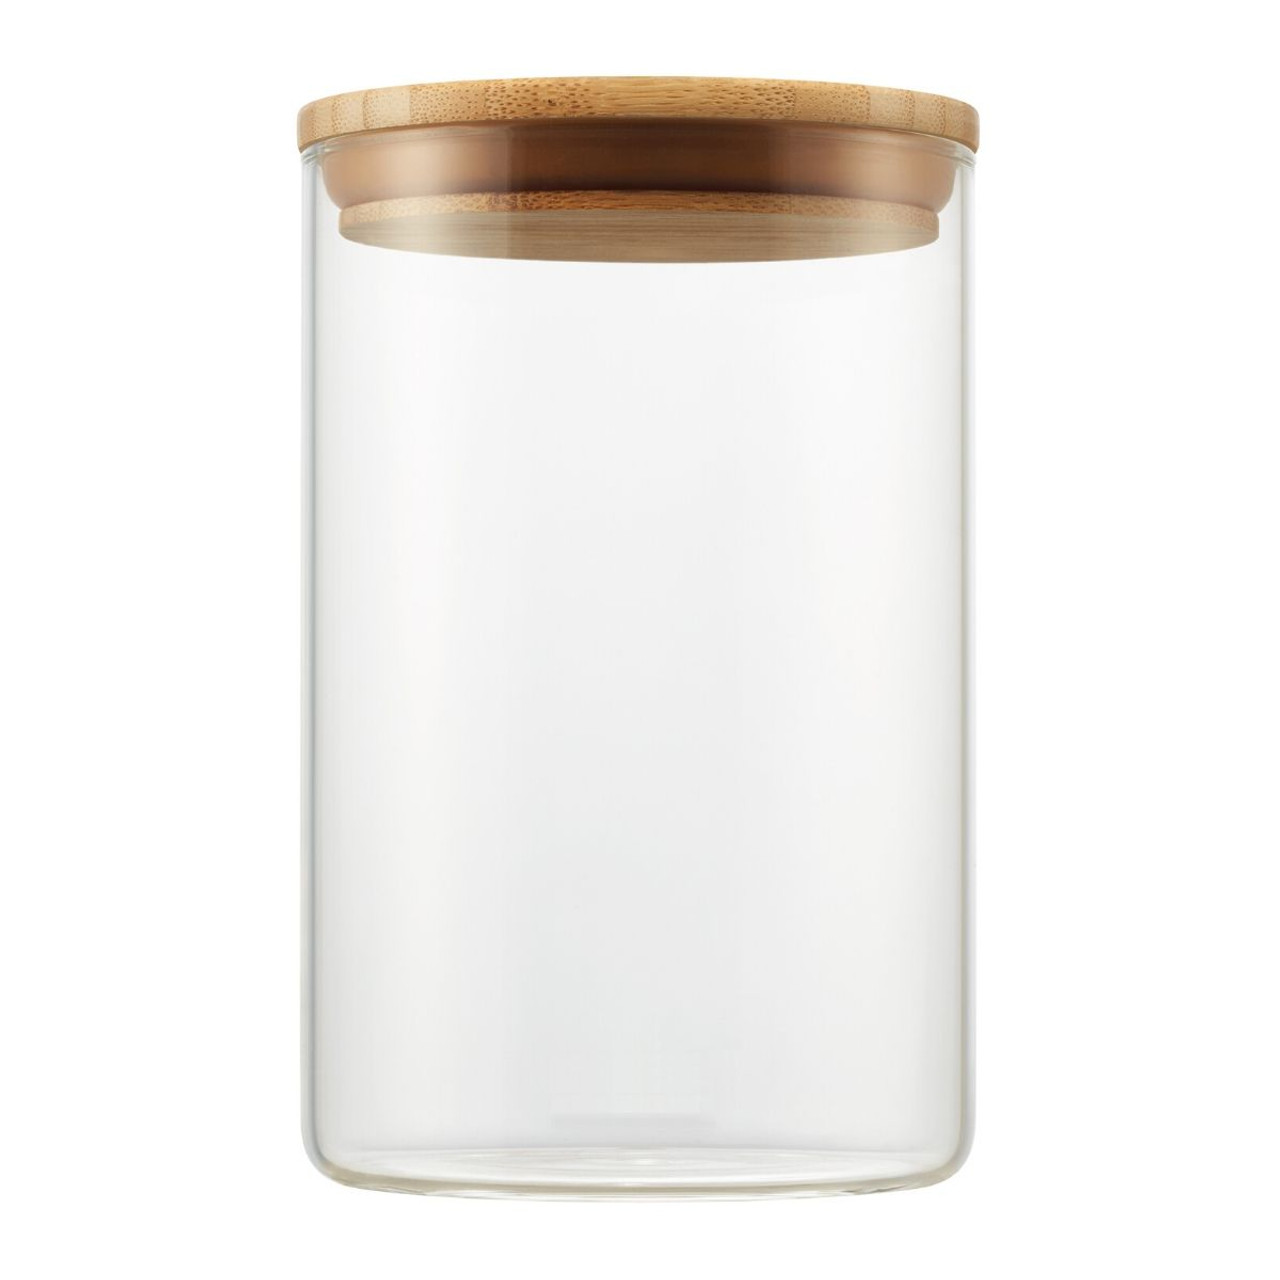 Green Bamboo Glass Cup - Crystal Glass - Capacity 8.5 oz - ApolloBox